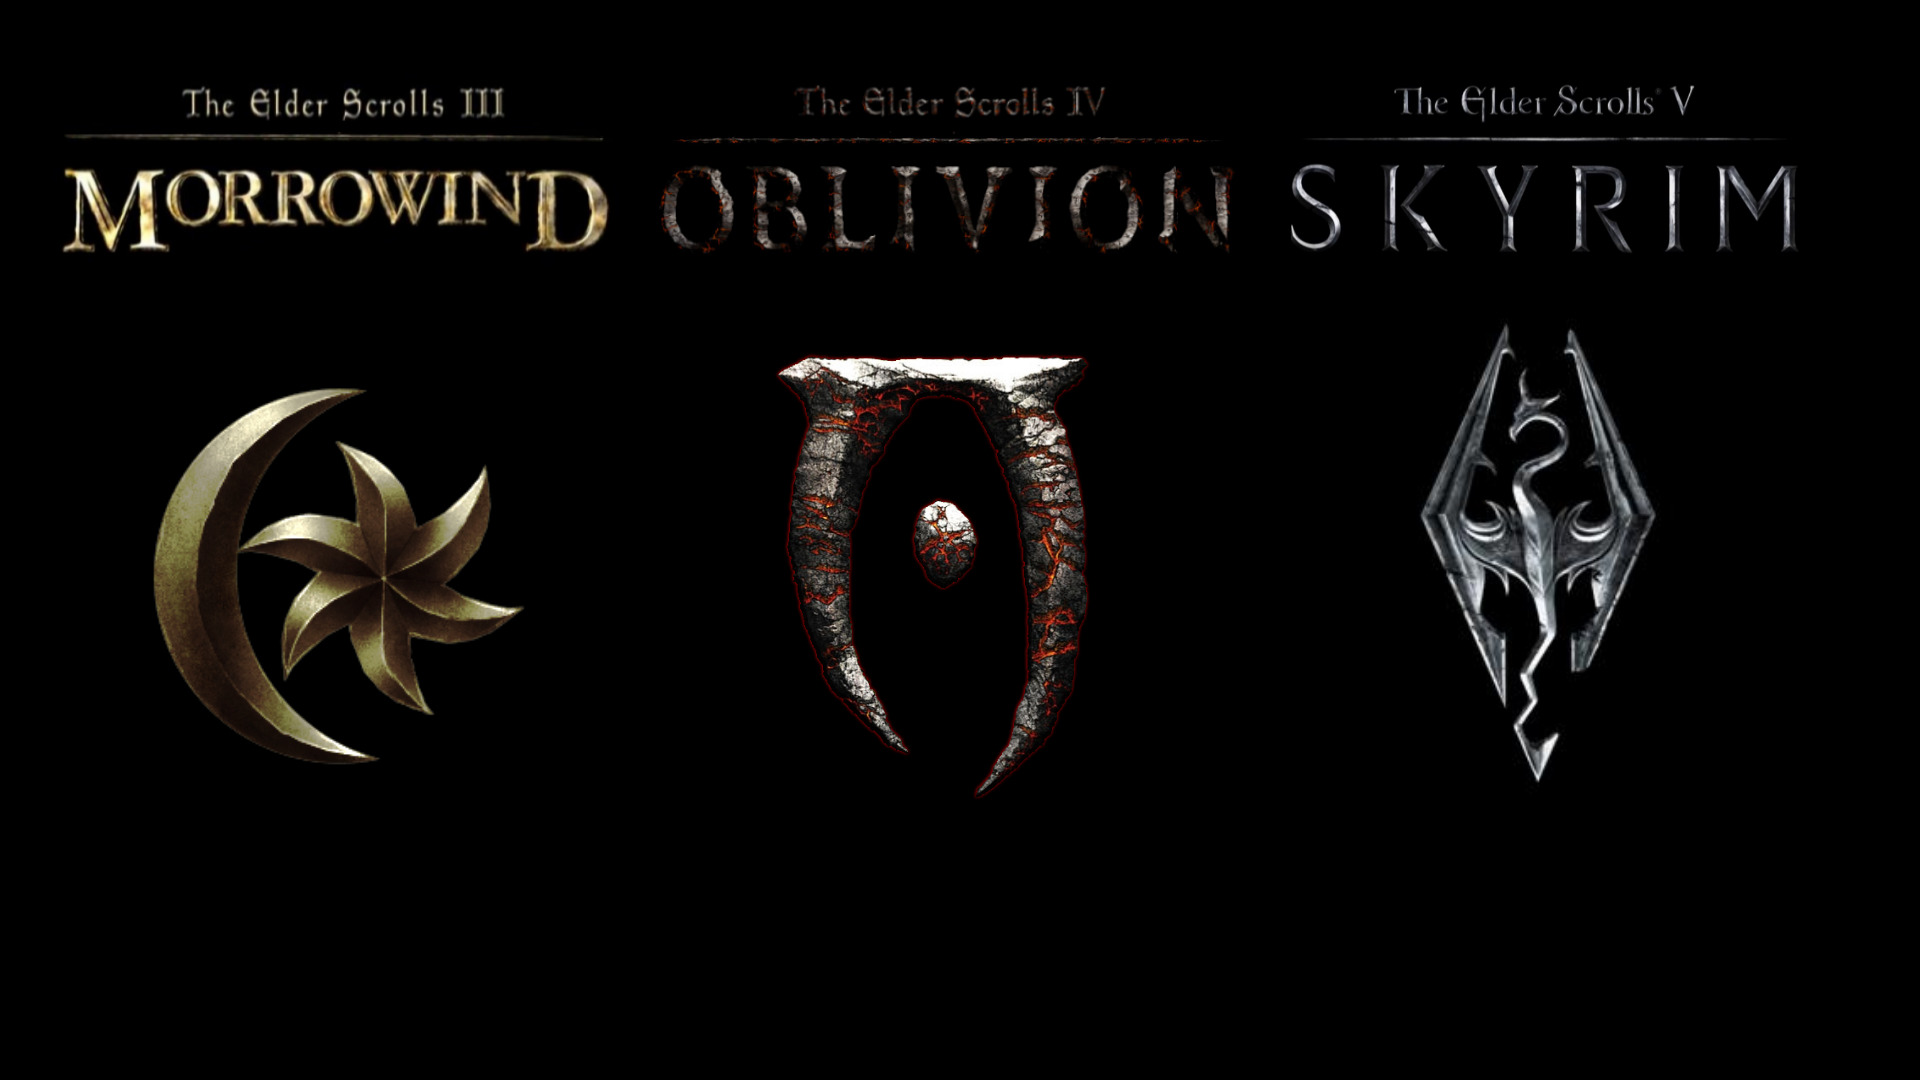 The Elder Scrolls, The Elder Scrolls V: Skyrim, The Elder Scrolls IV: Oblivion, The Elder Scrolls III: Morrowind Wallpaper